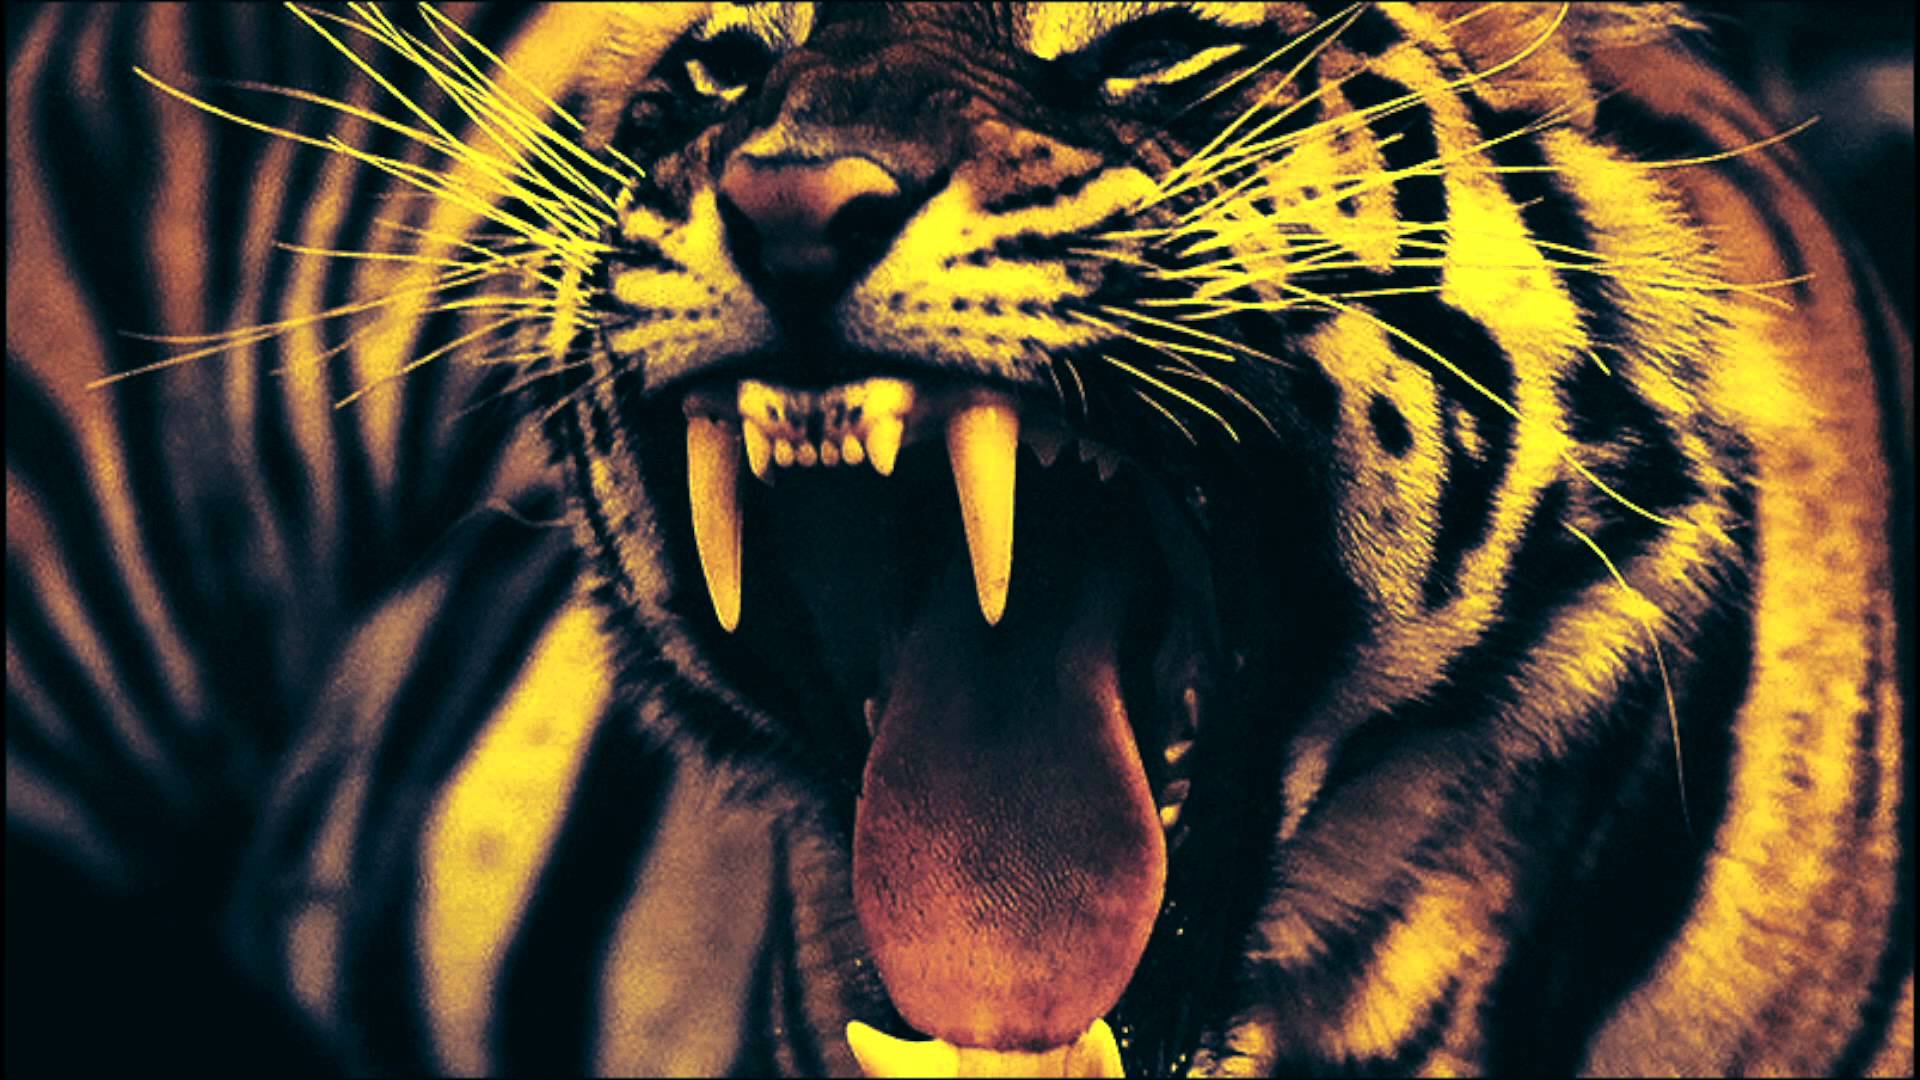 ShockFront - EYE OF THE TIGER (80s Metal Version) - YouTube